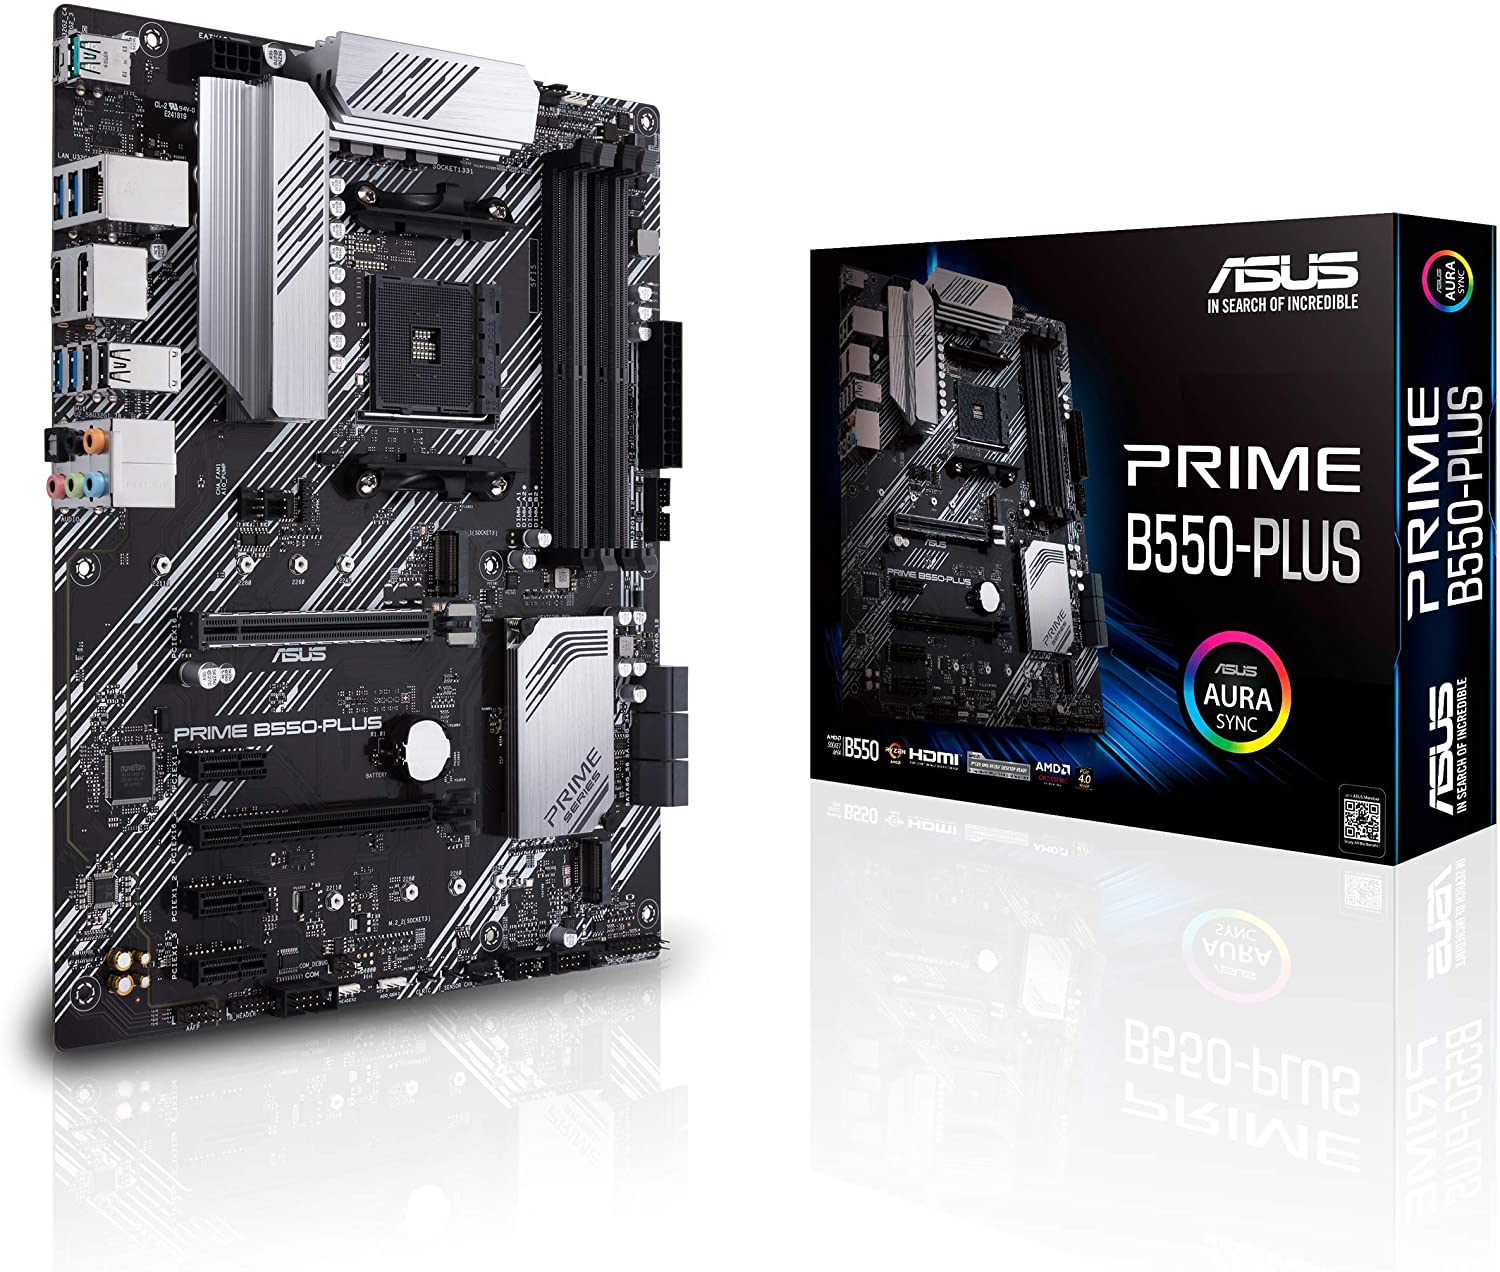 MB ASUS PRIME B550 PLUS AMD RYZEN DDR4